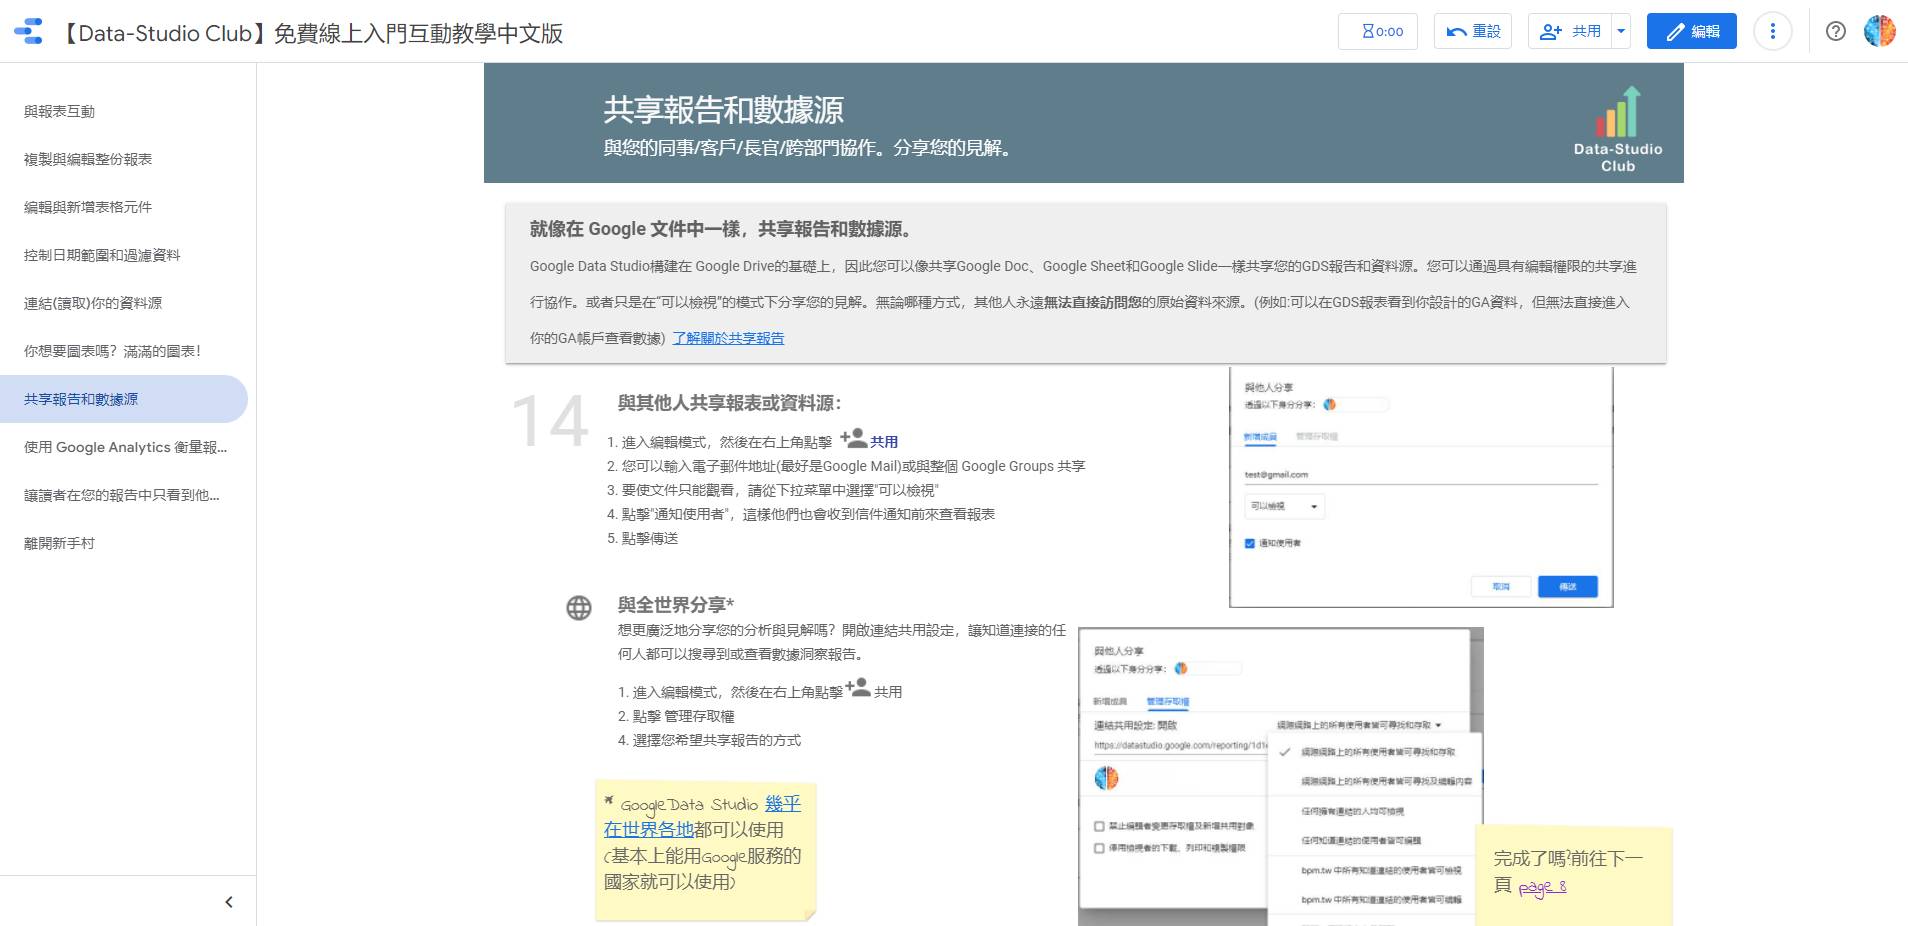 Google Data Studio online course chinese version-7